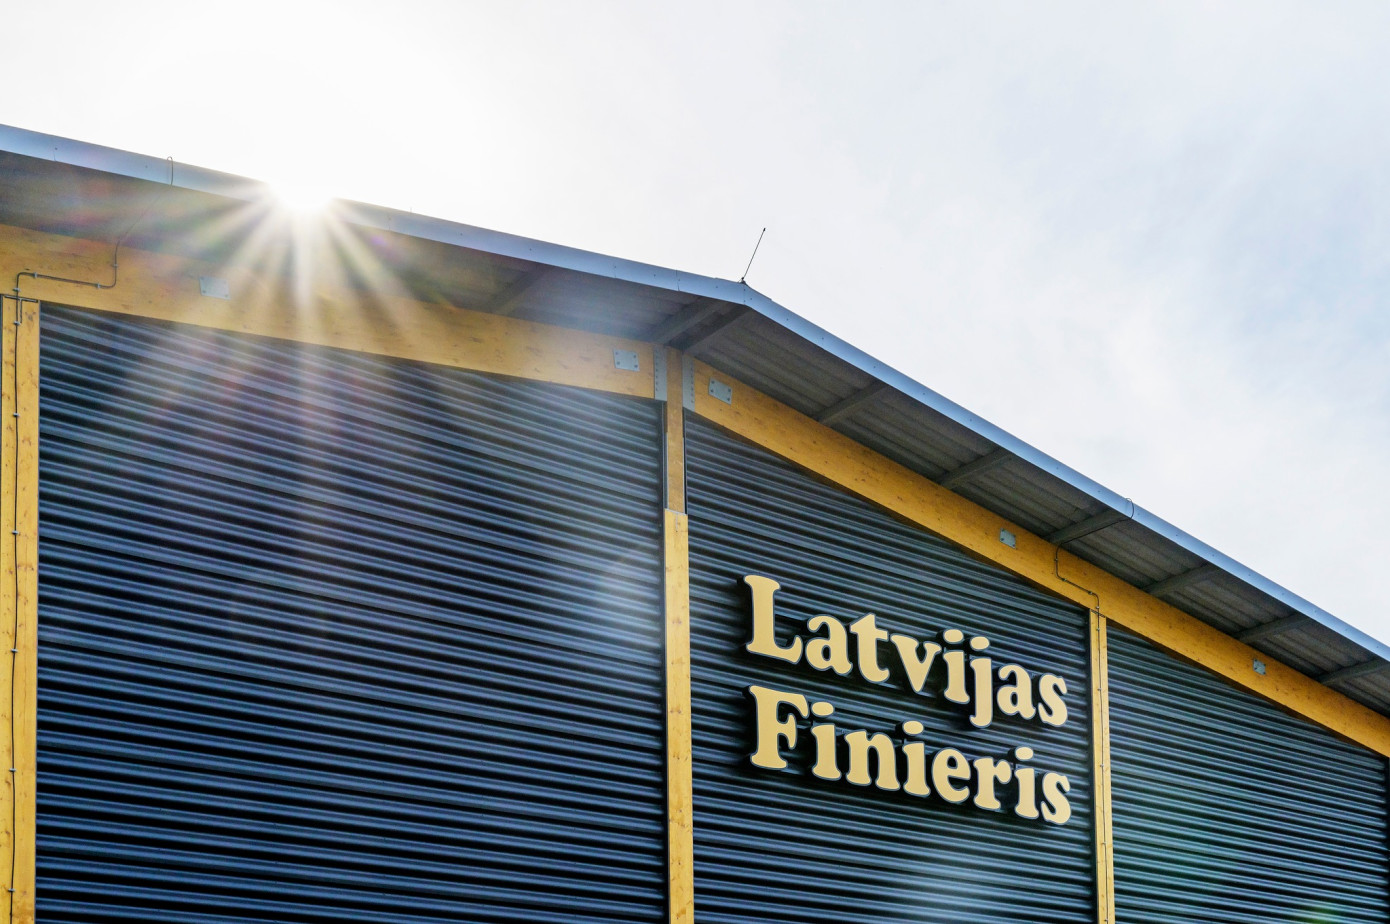 Latvijas Finieris reports 36% turnover increase in 2022